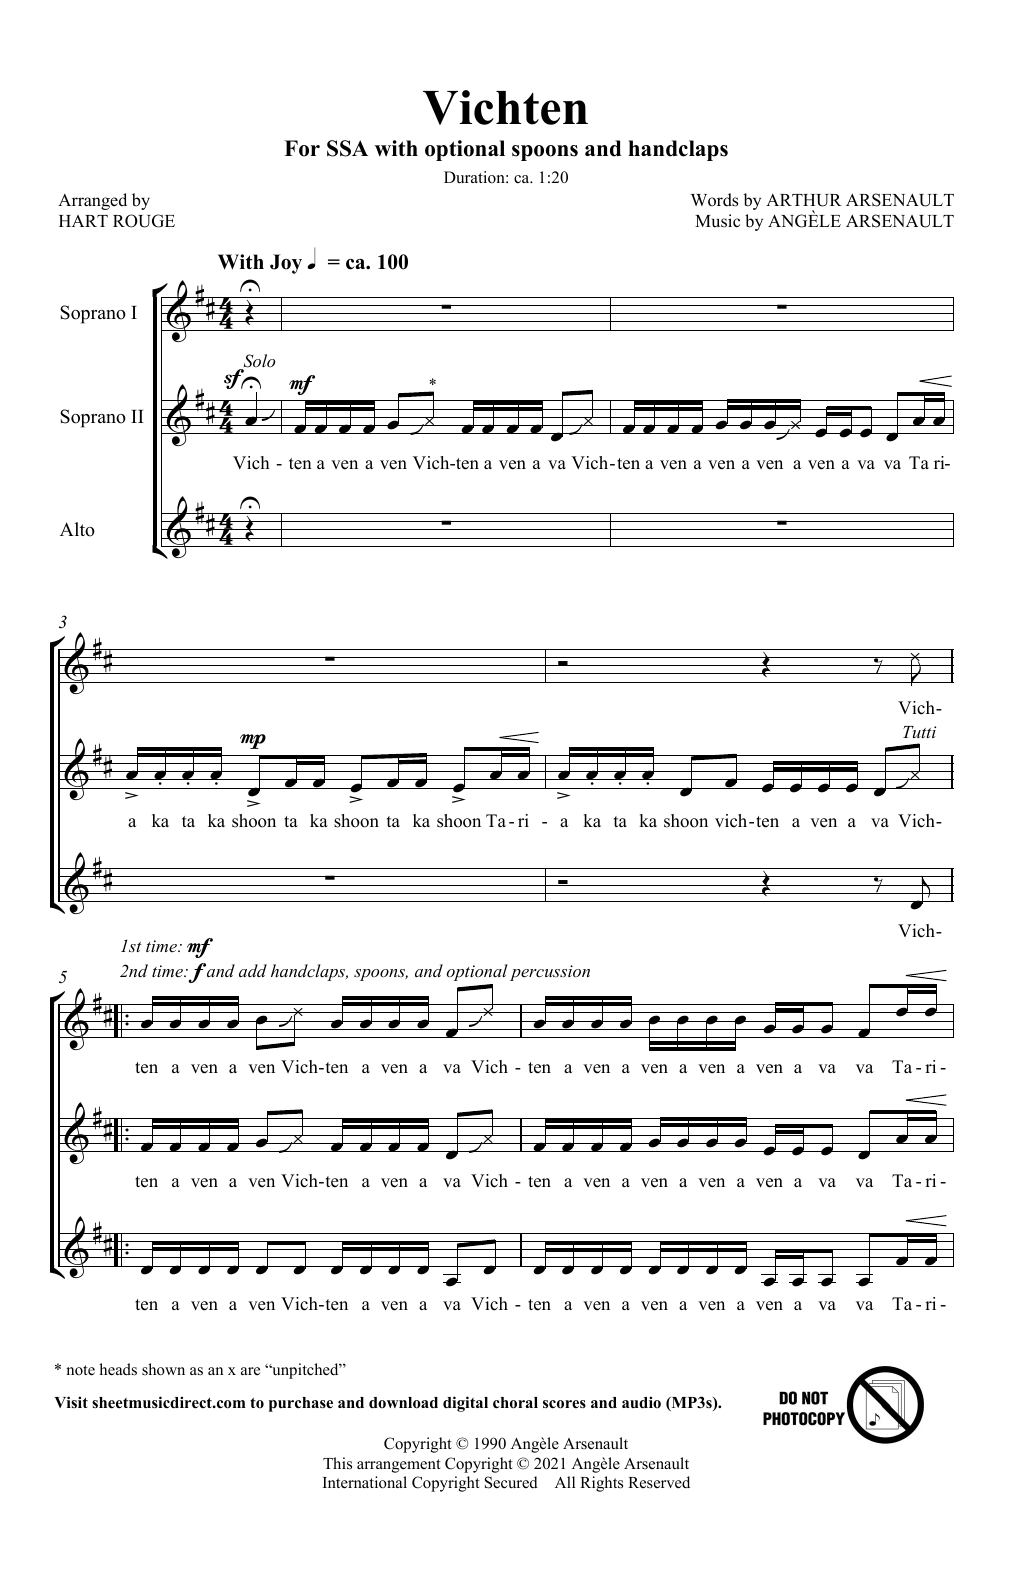 Arthur Arsenault Vichten (arr. Hart Rouge) sheet music notes and chords arranged for SSA Choir